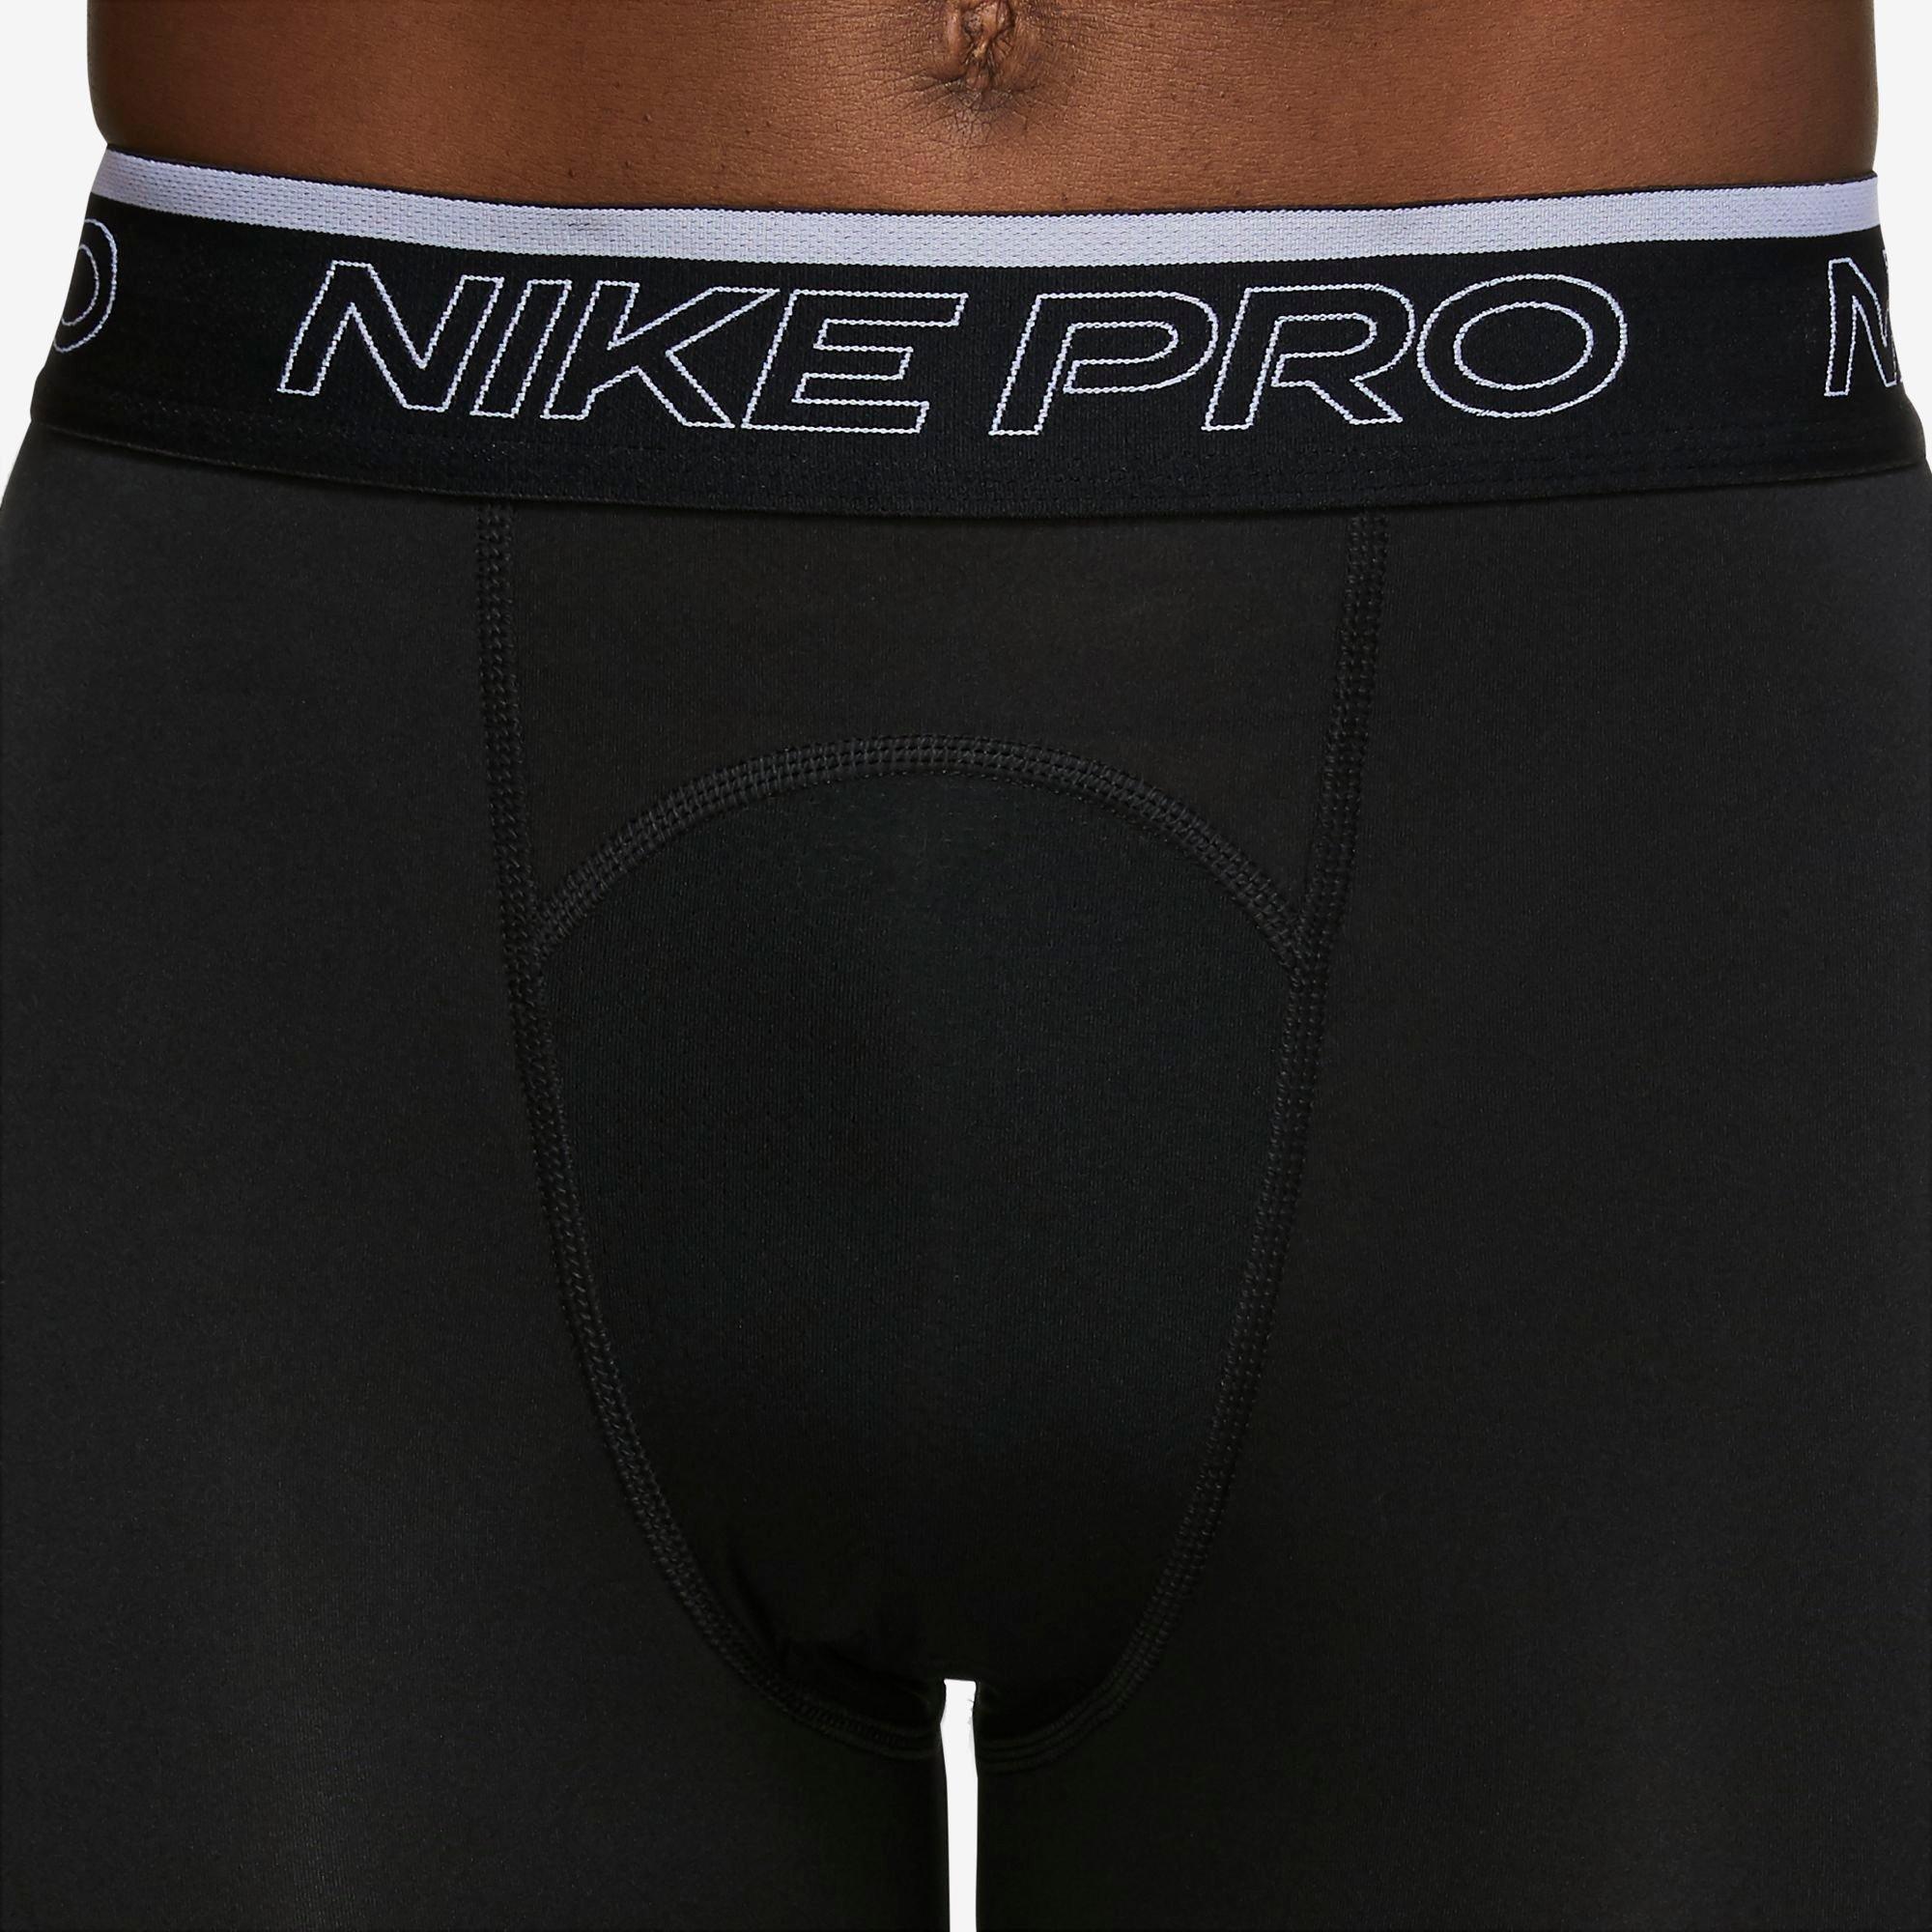 NWT Nike® Dri-Fit® Pro Print Compression BLACK/WHITE Tights